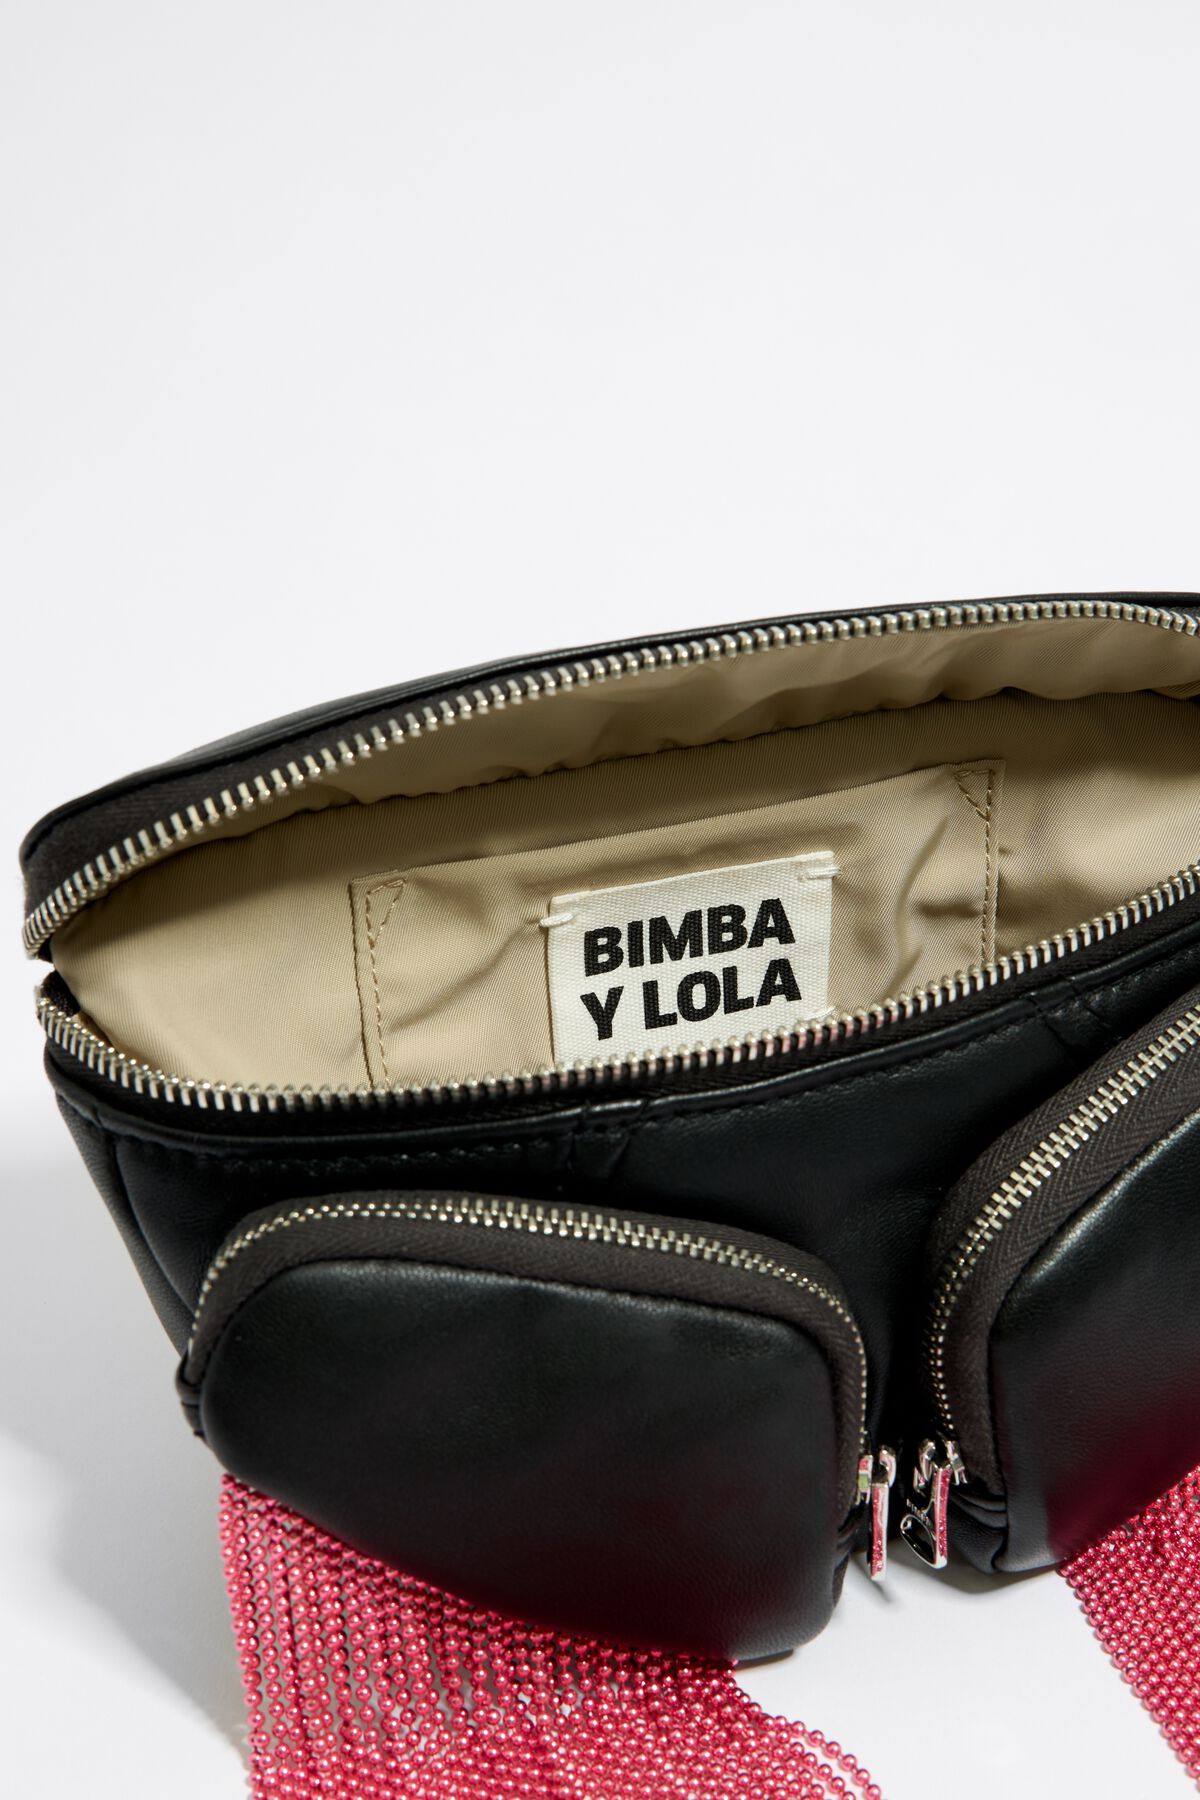 Bimba y Lola Are Bringing Back The Pocked Bag